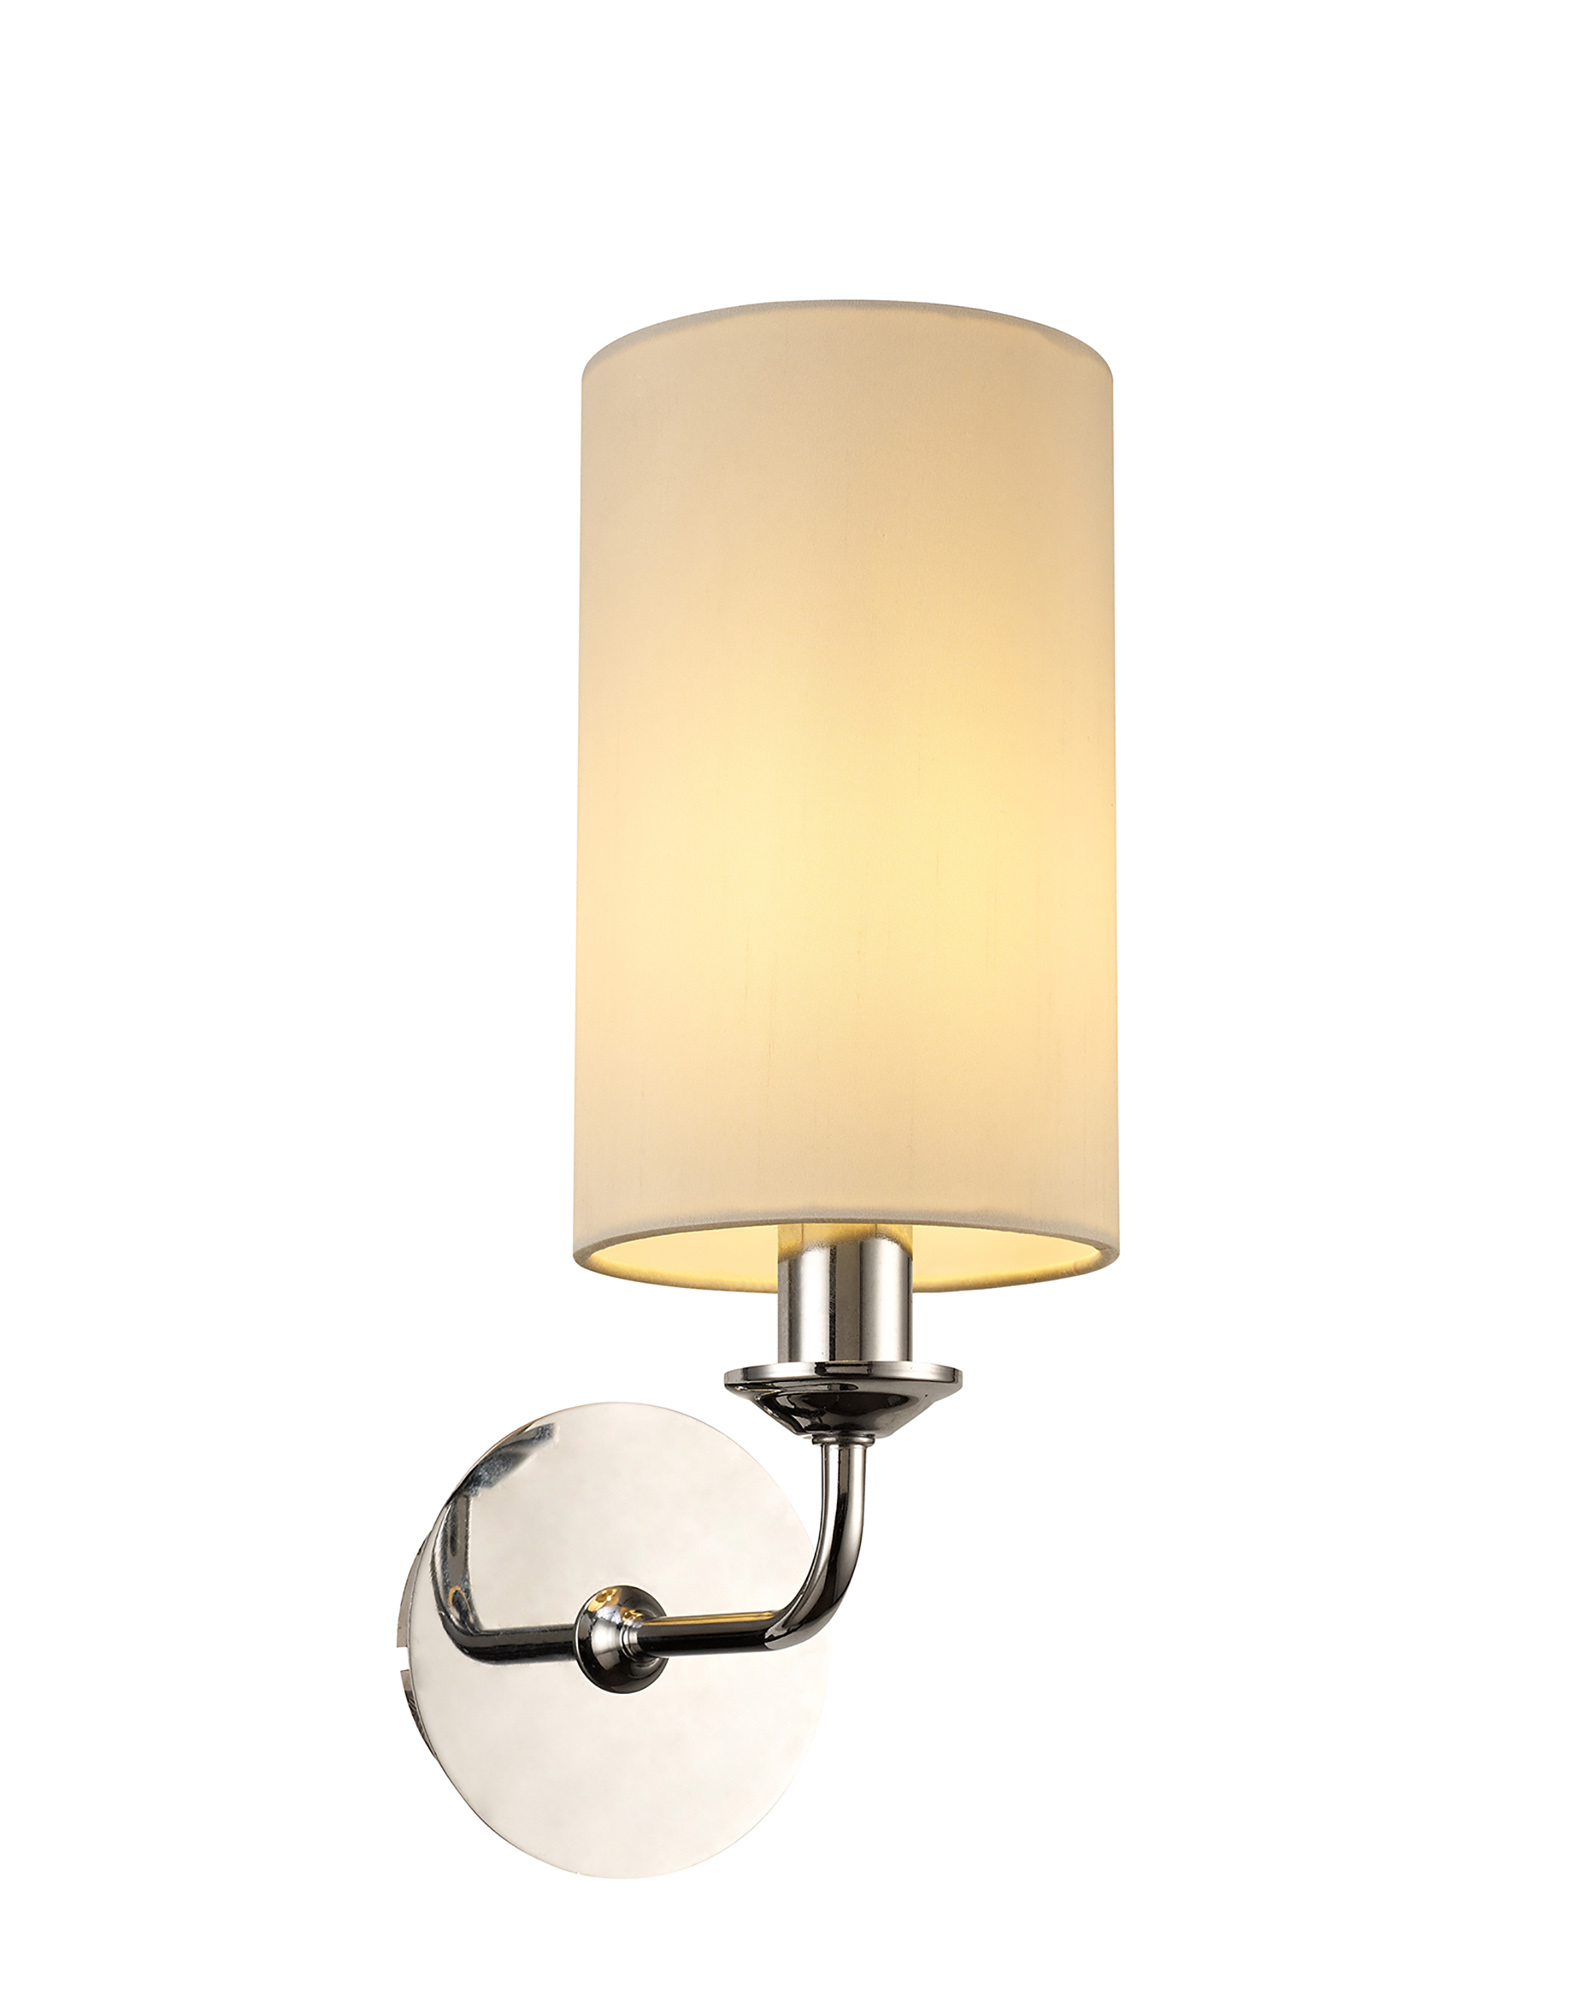 DK0012  Banyan Wall Lamp 1 Light Polished Chrome, Ivory Pearl